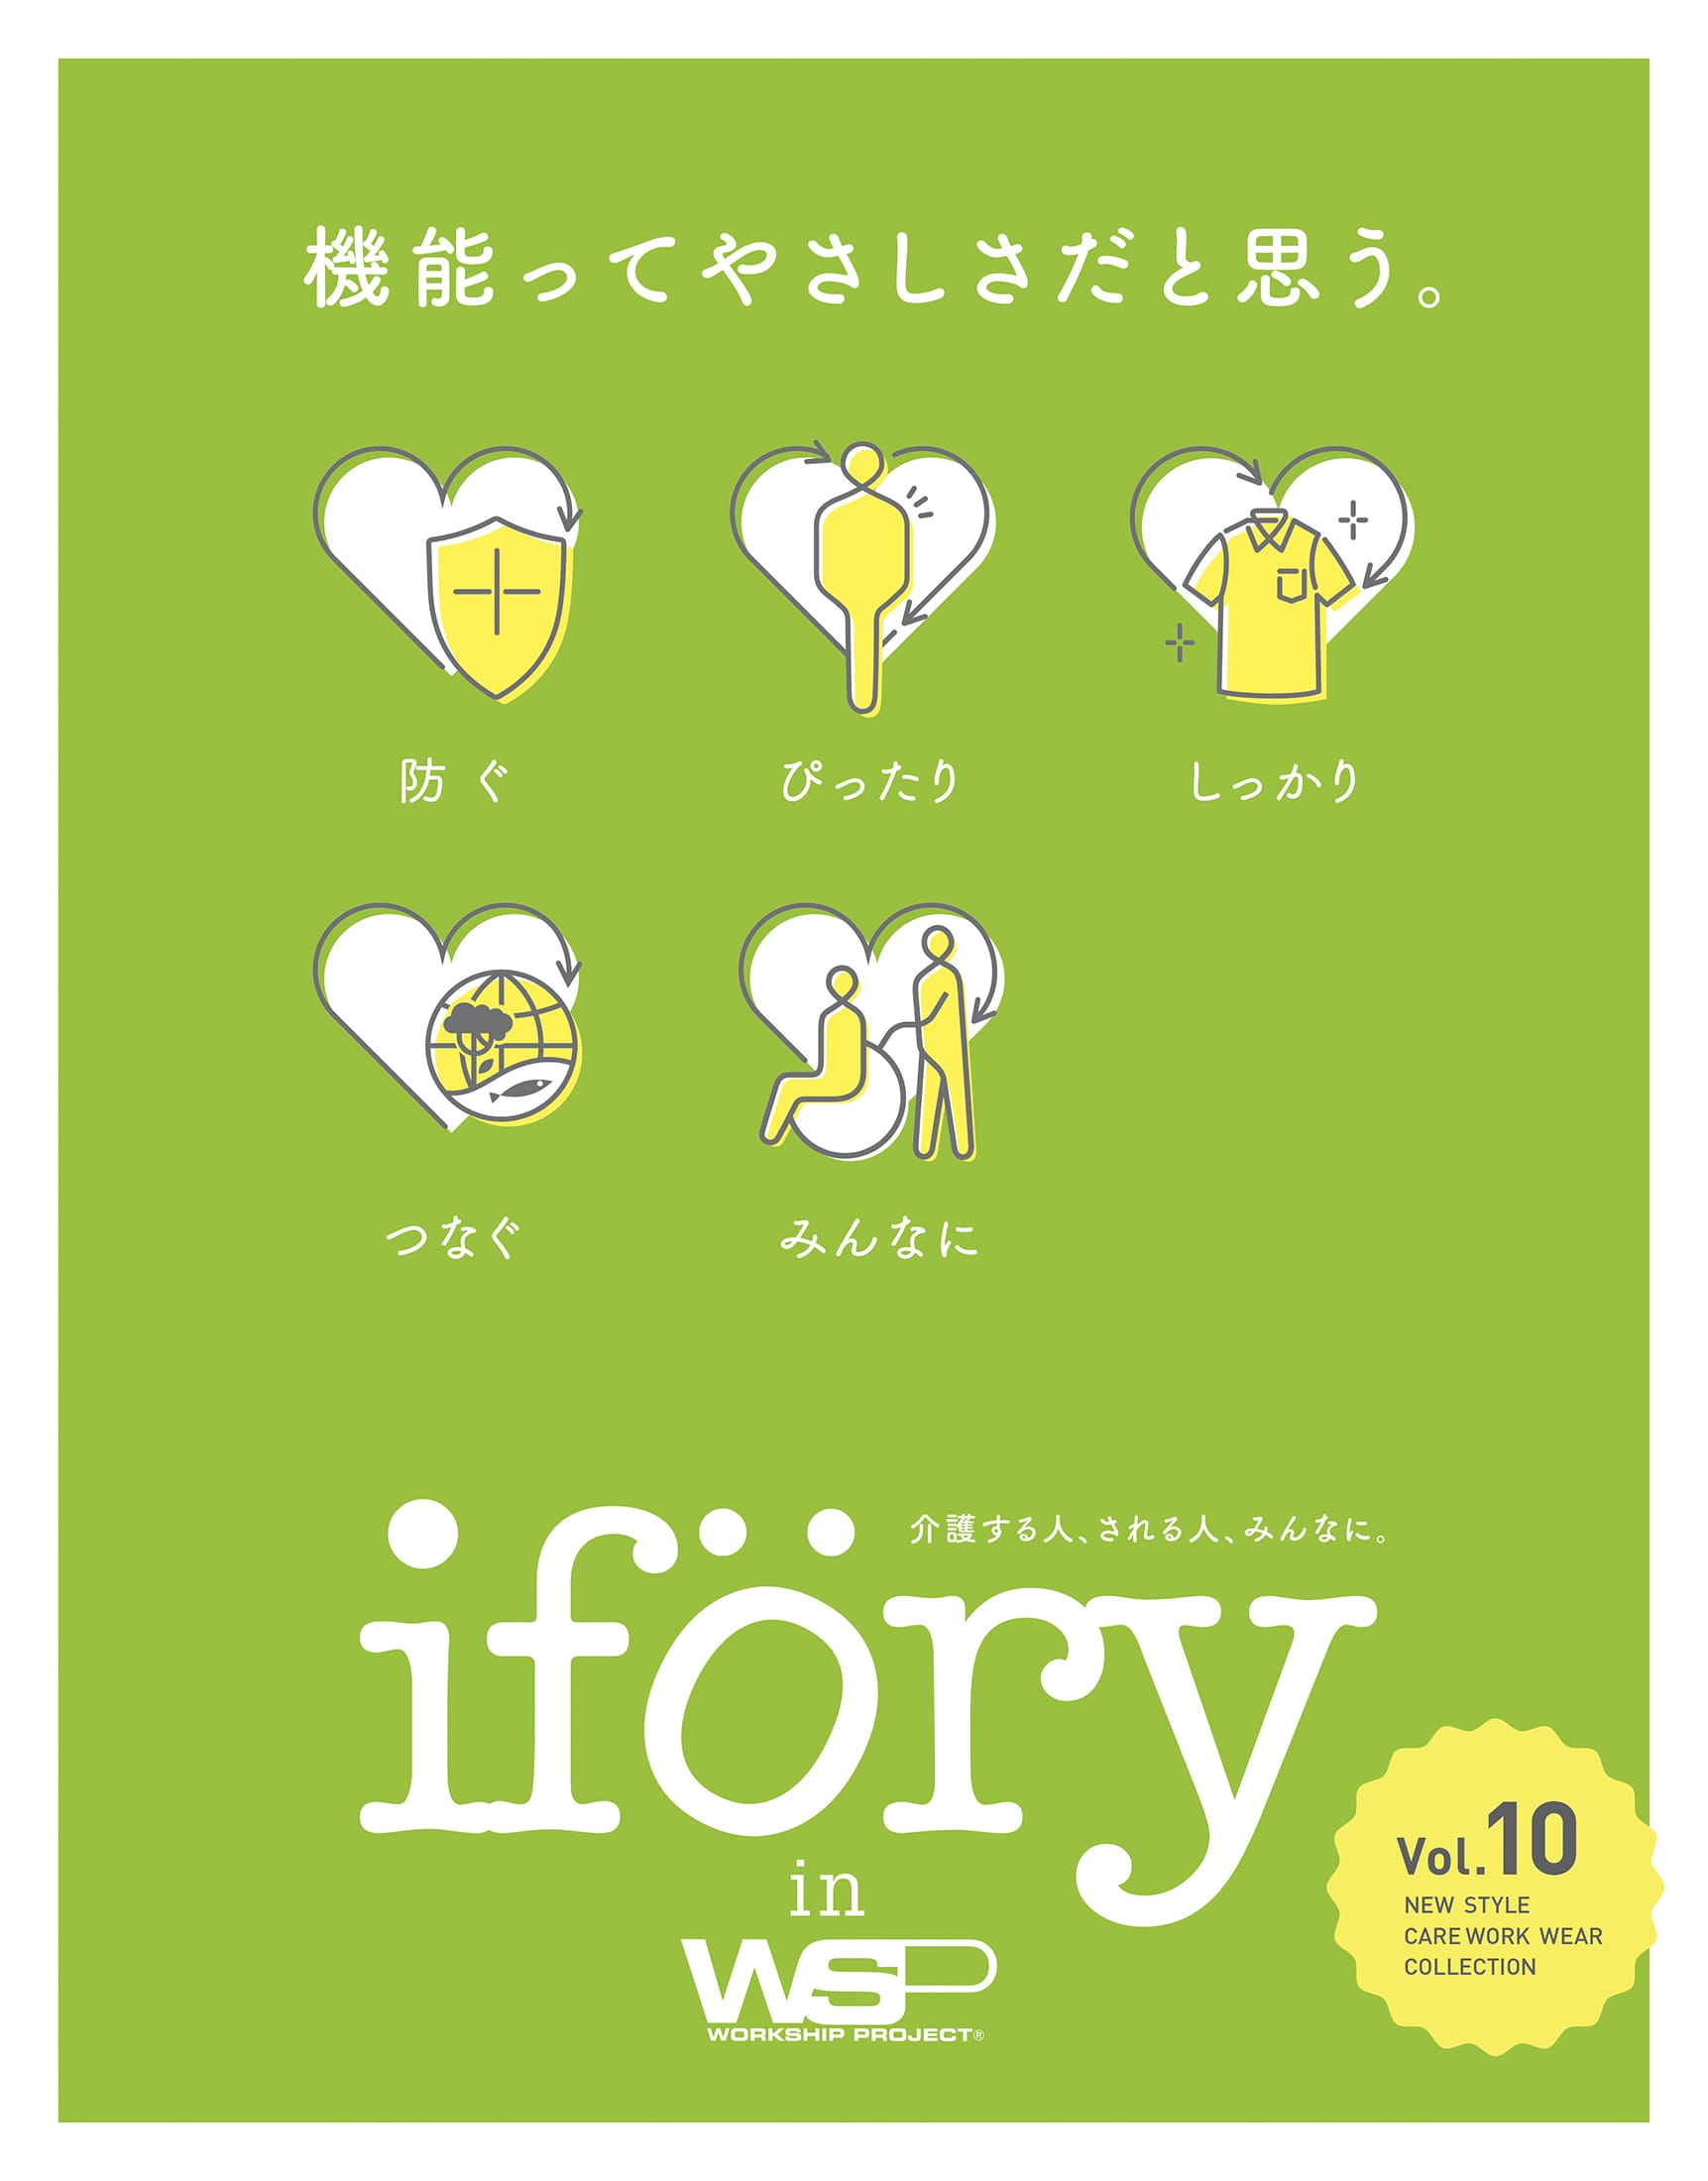 ifory in WSP(アイフォリー)